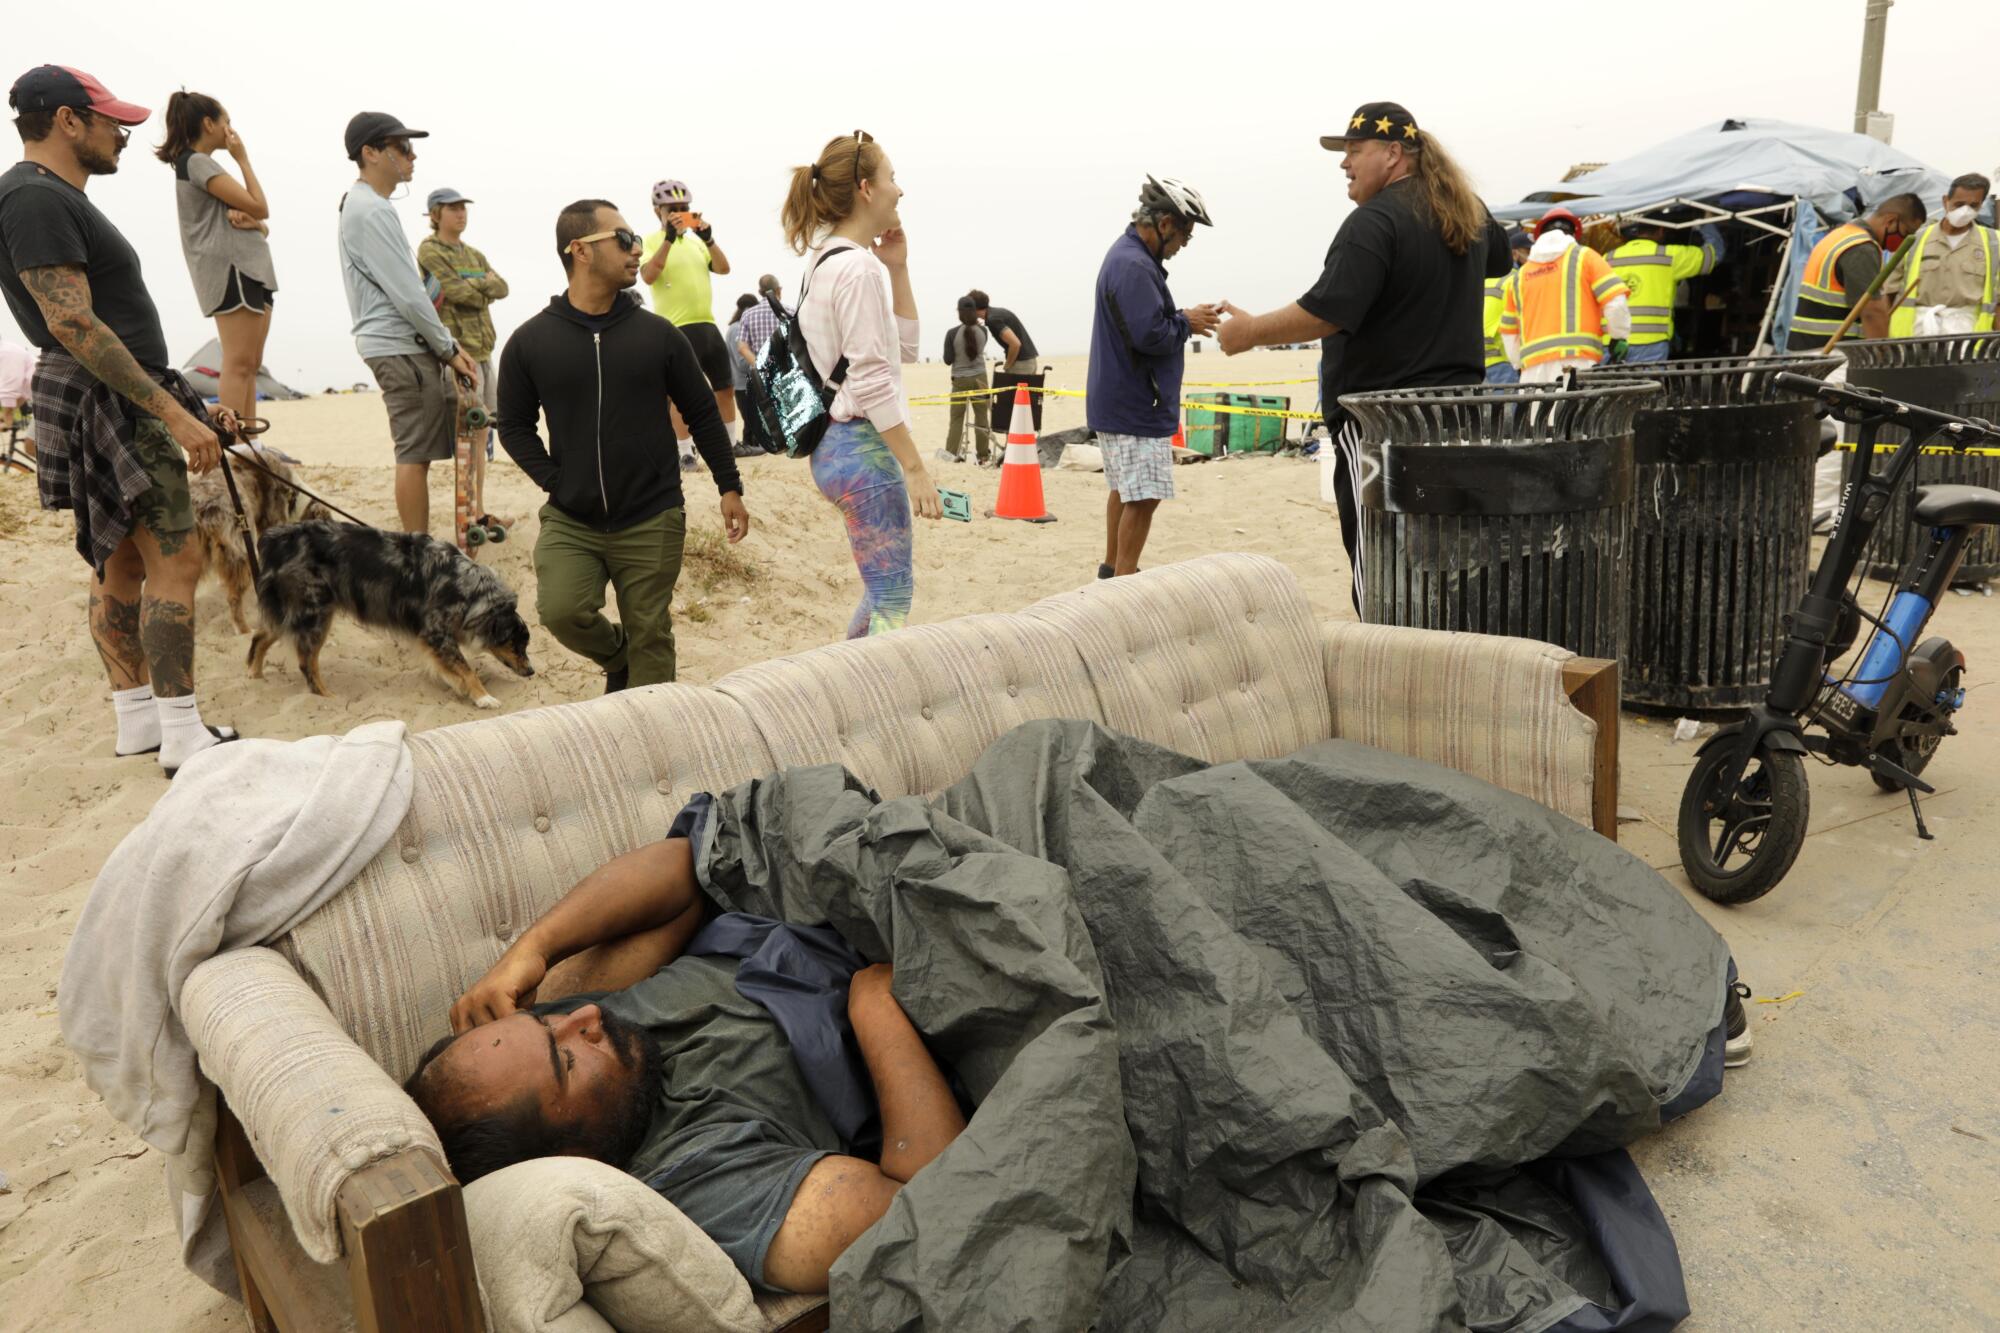 A homeless man sleeps on a couch while sanitation crews clear a homeless encampment in Venice